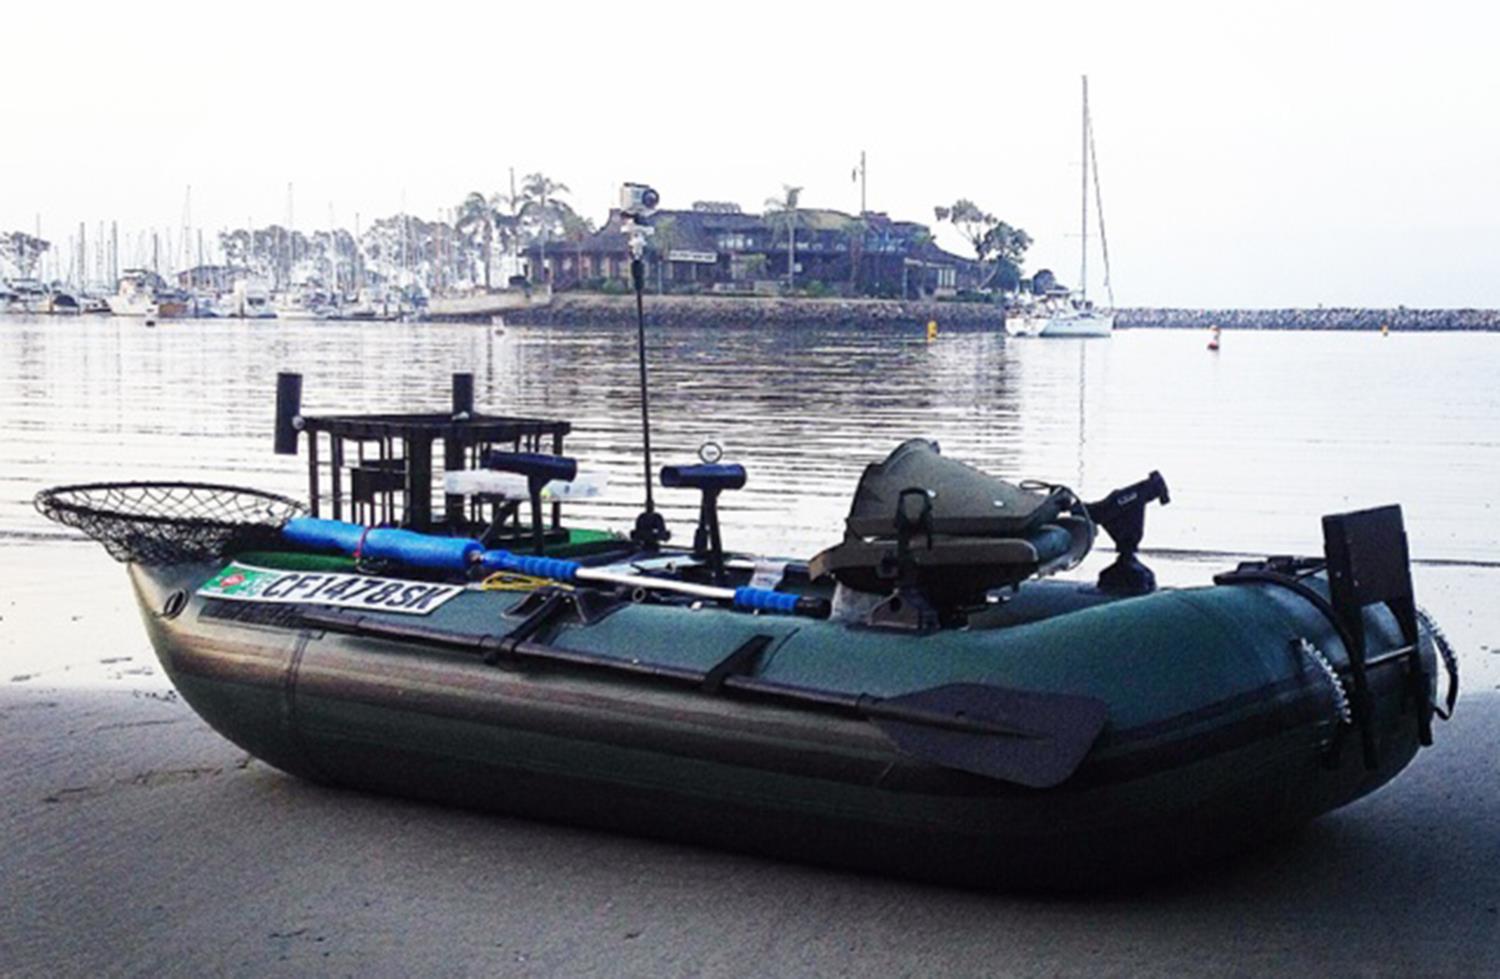 Outboard inflatable boat - FishSkiff™ 16 - SeaEagle.com - rigid